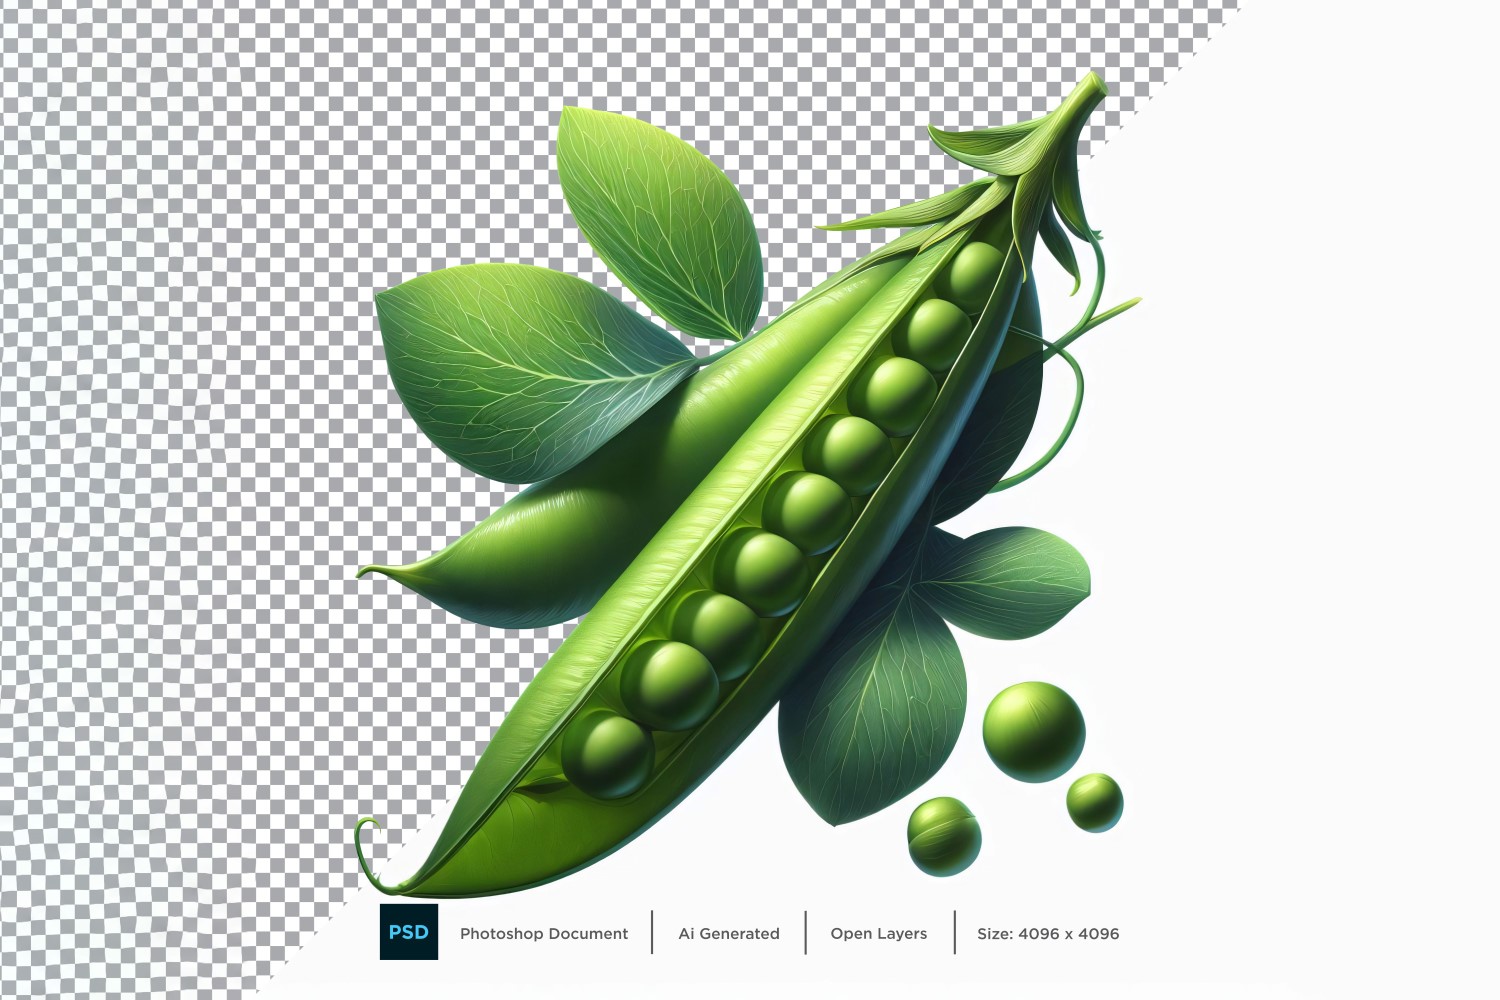 Peas Fresh Vegetable Transparent background 06